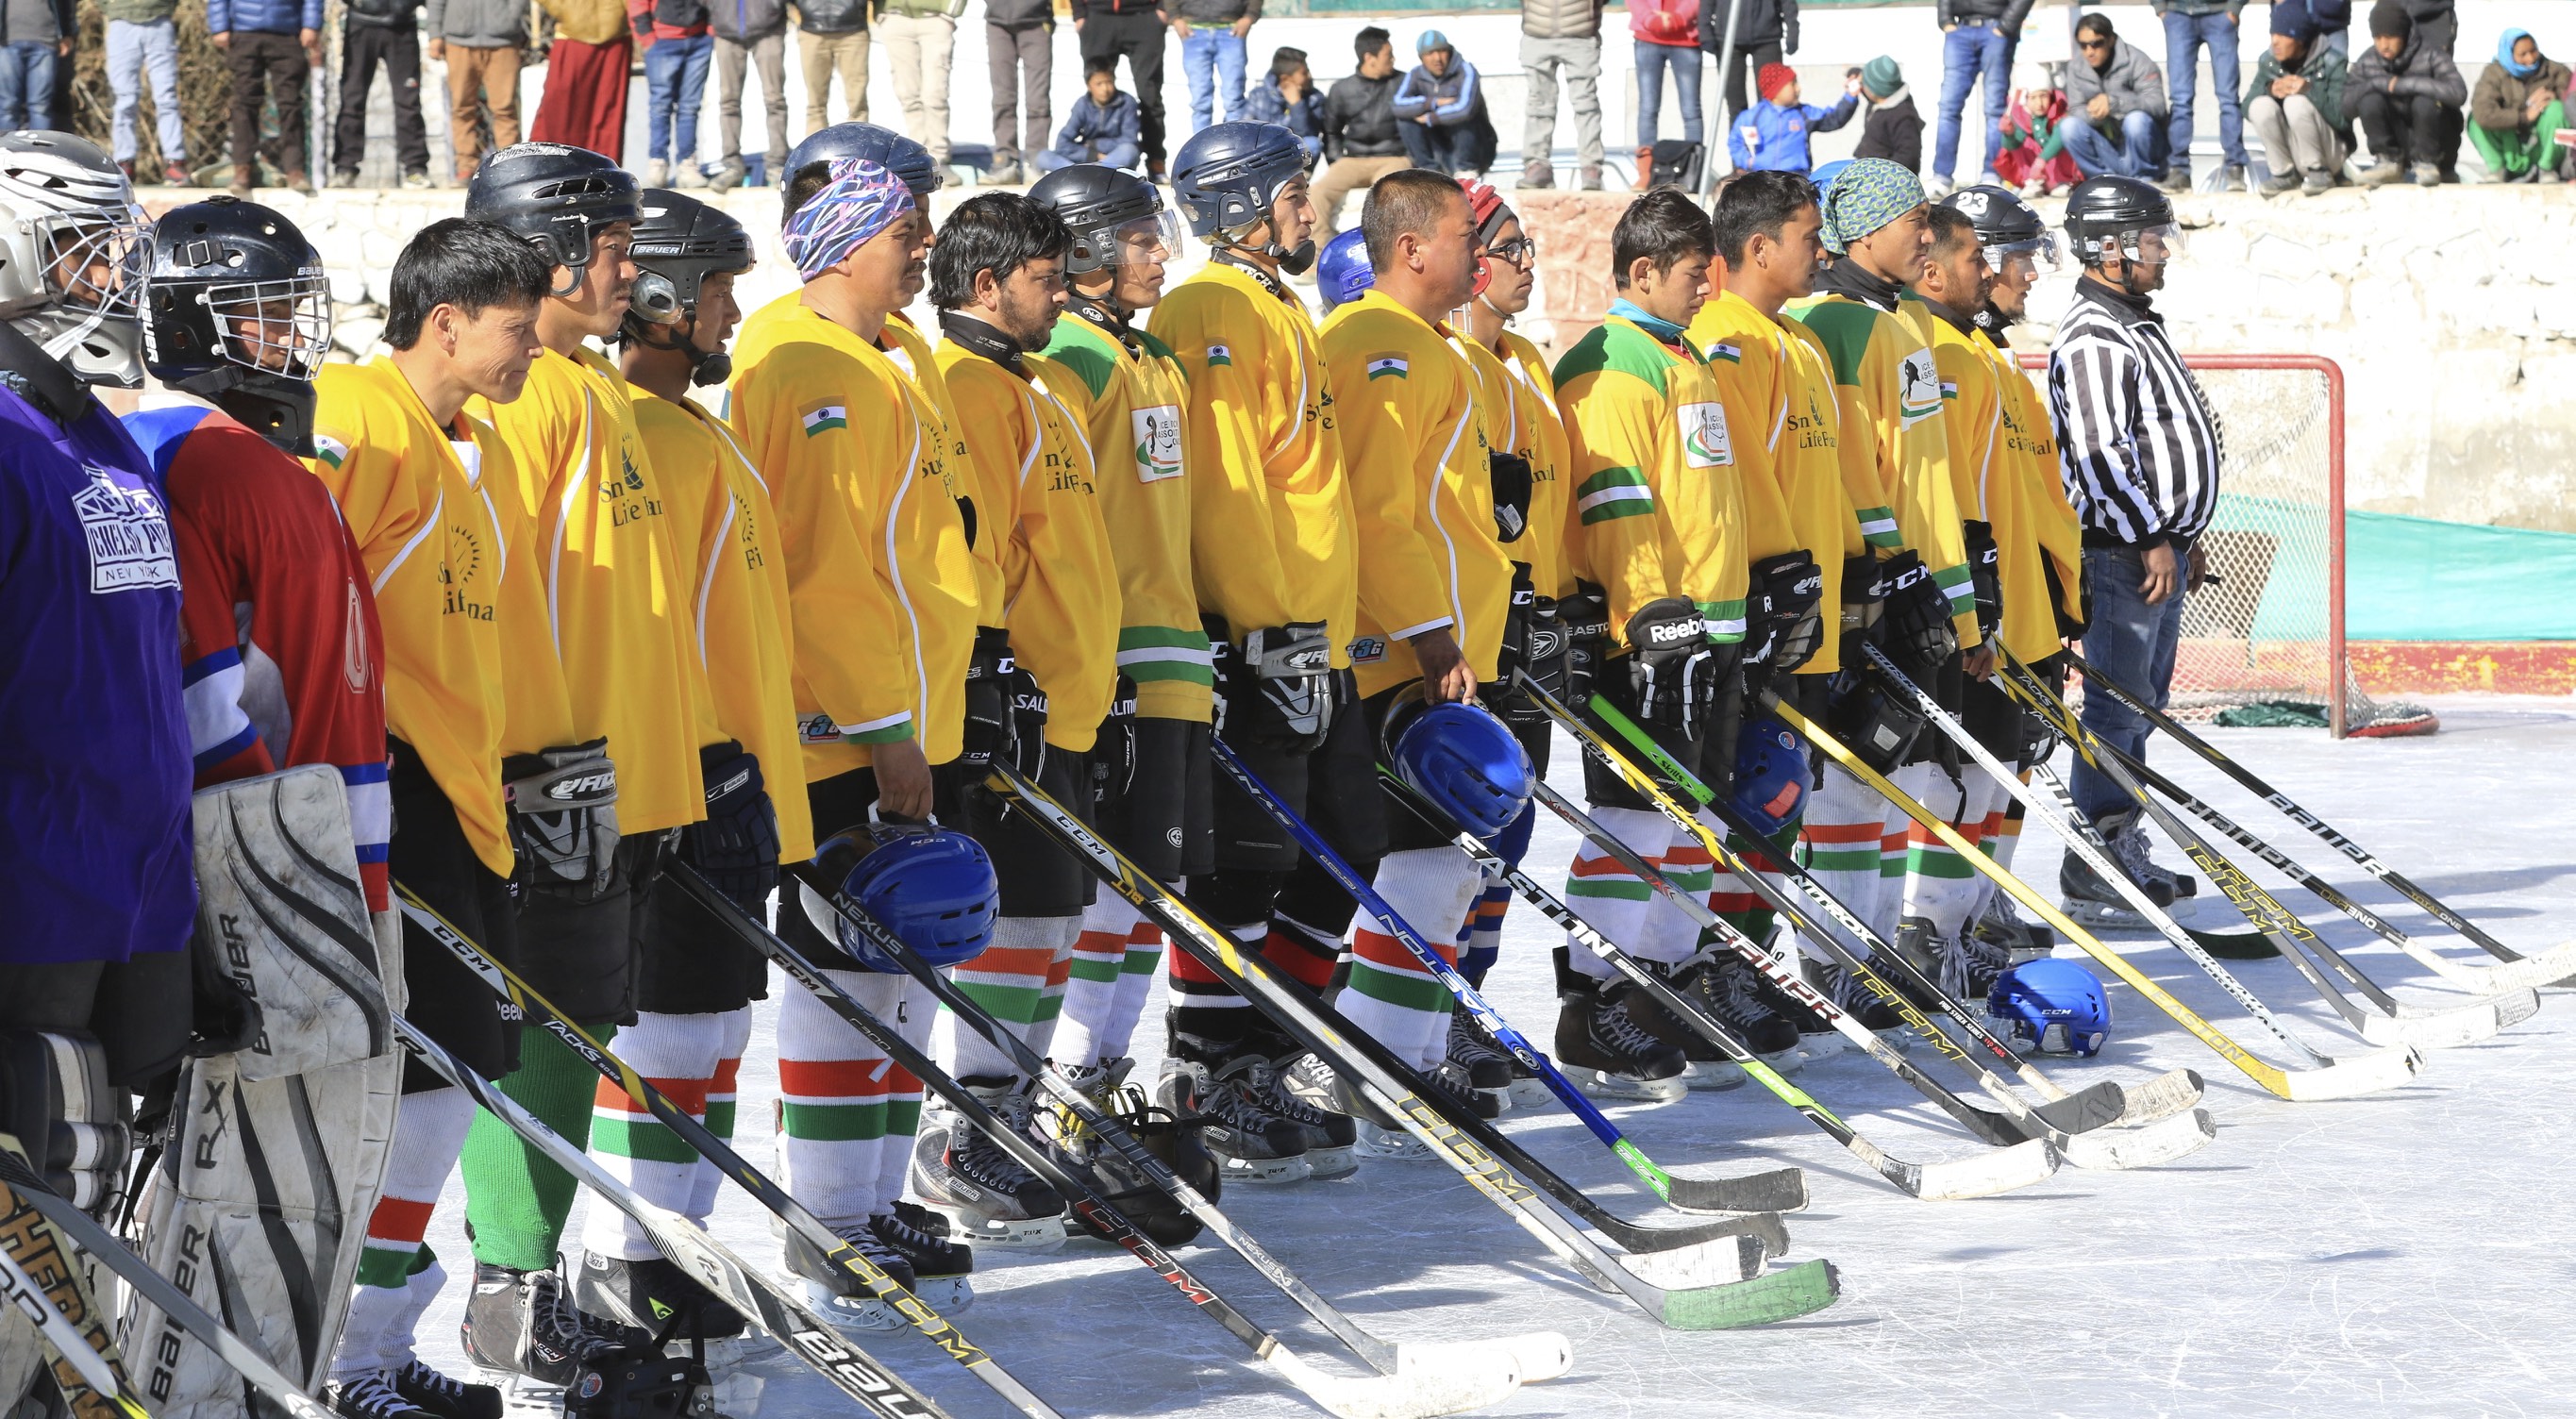 India - National Teams of Ice Hockey